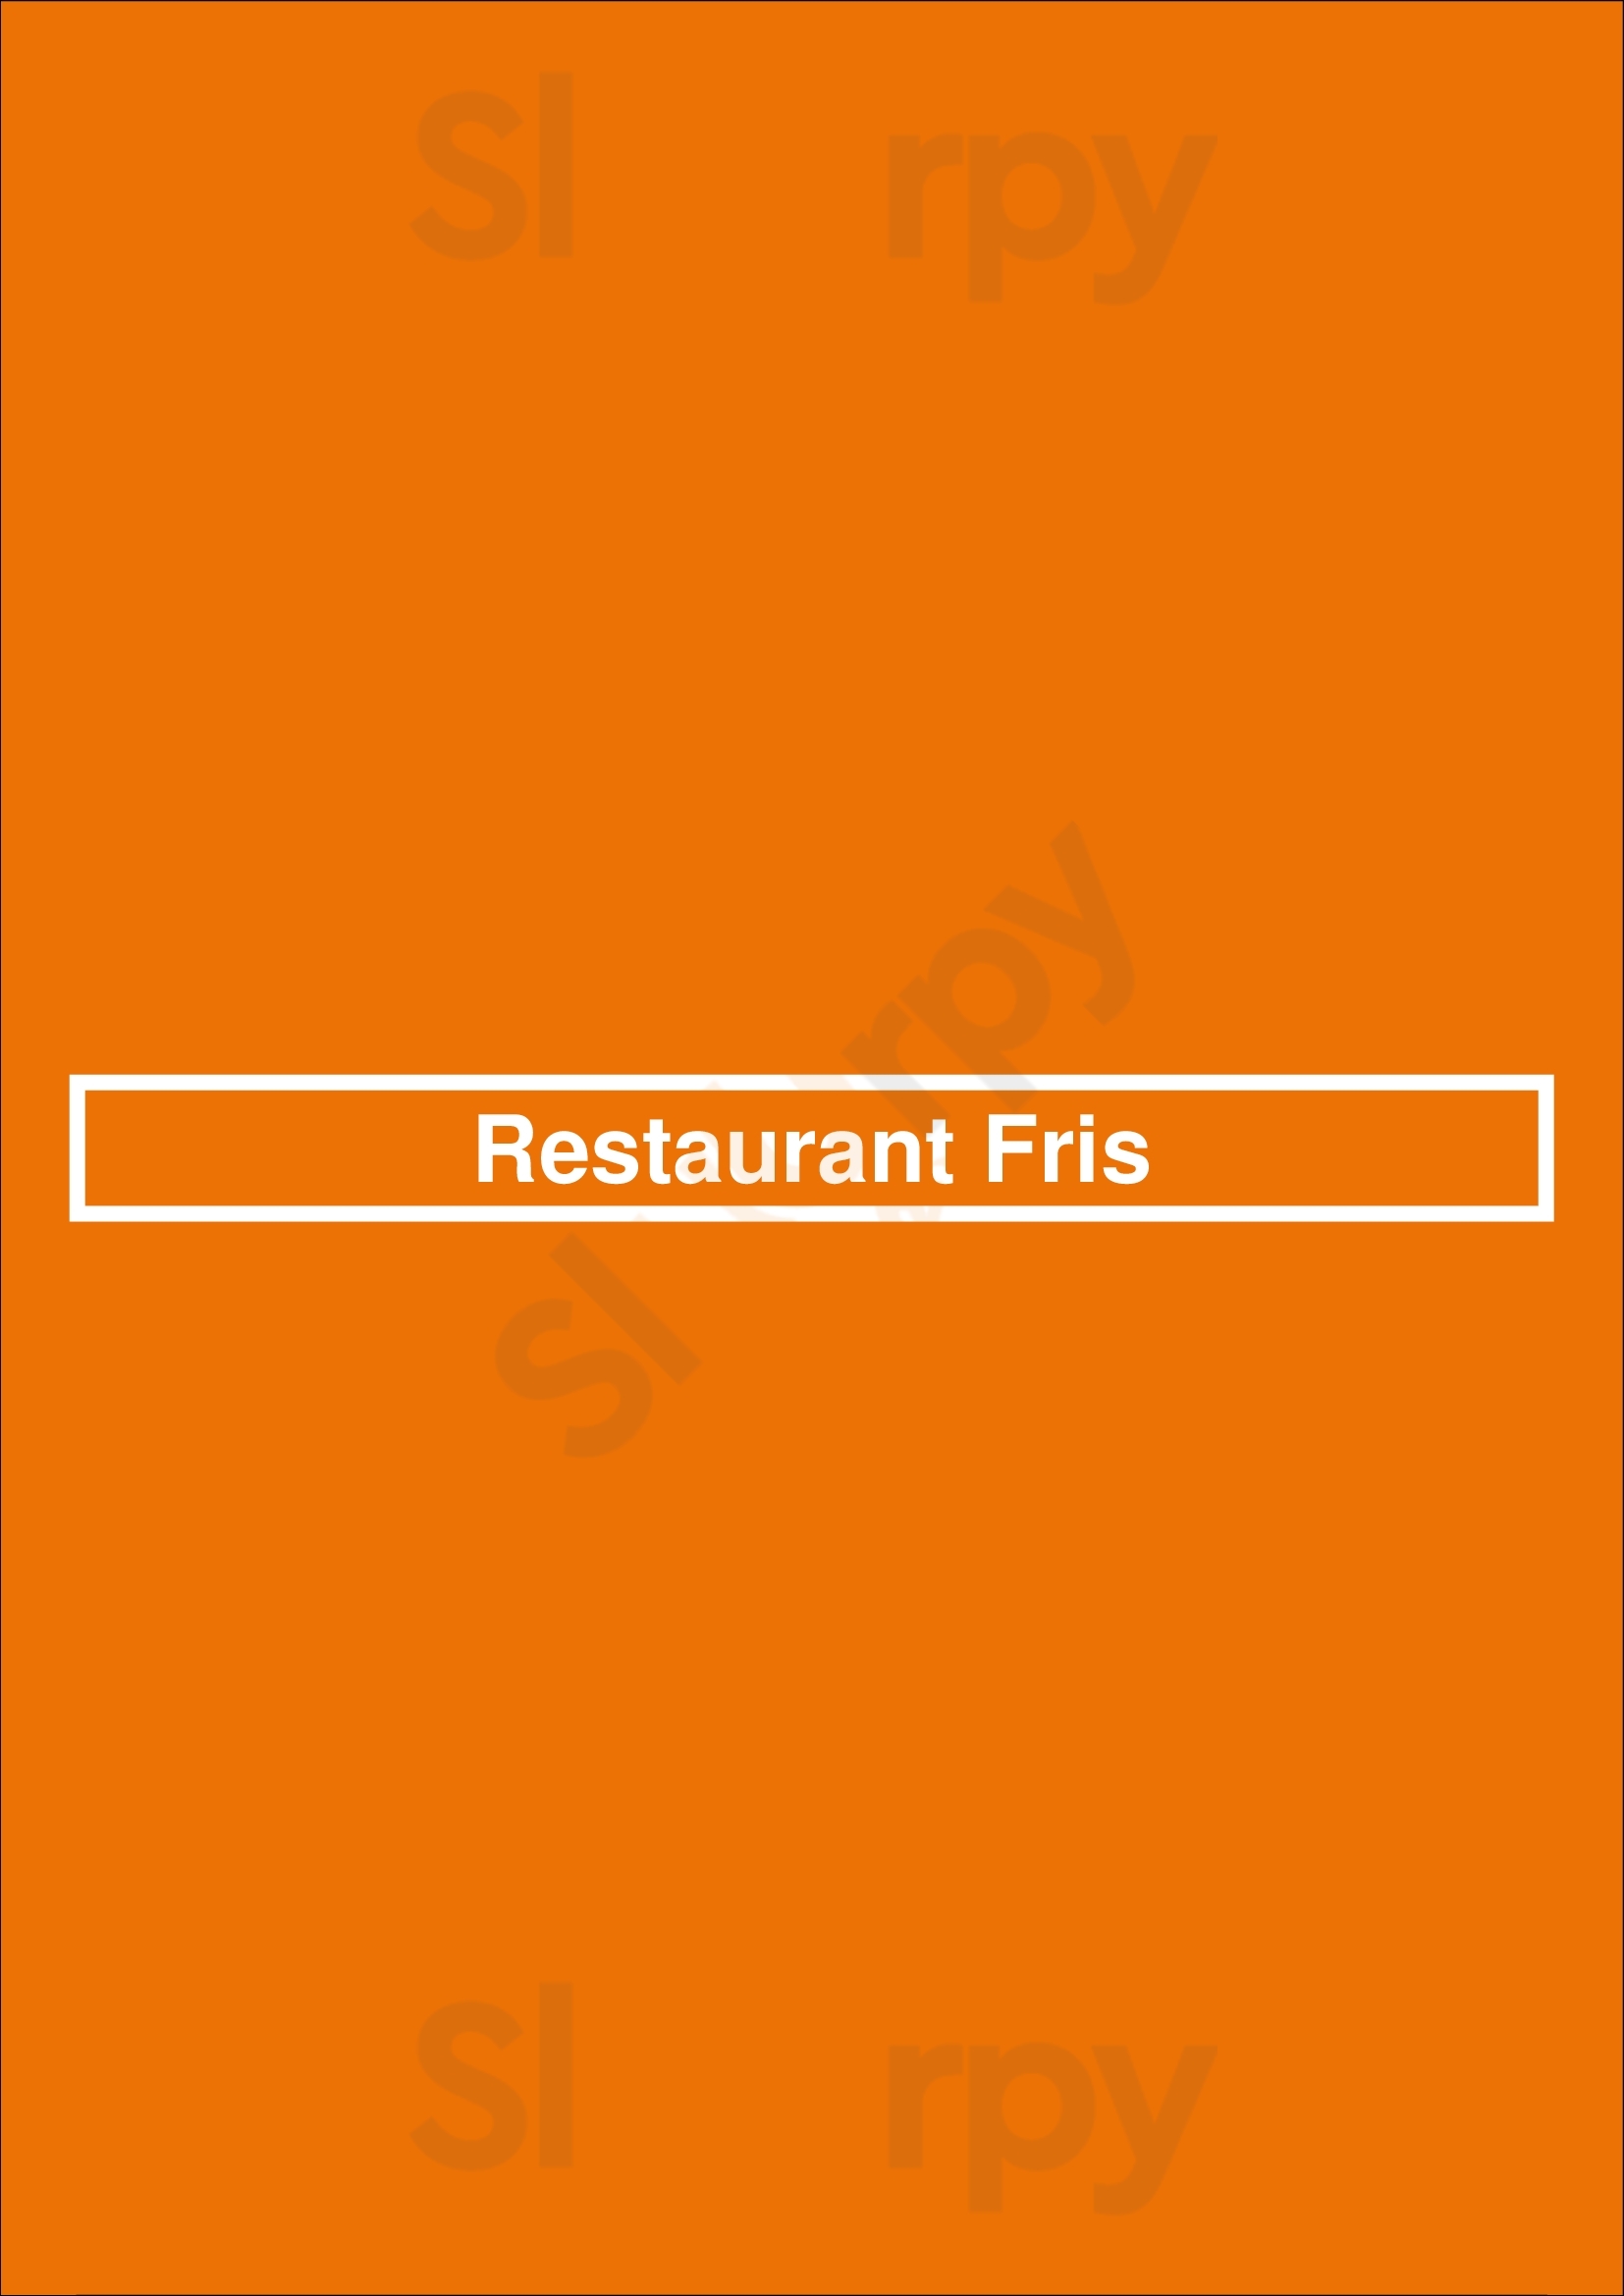 Restaurant Fris Haarlem Menu - 1